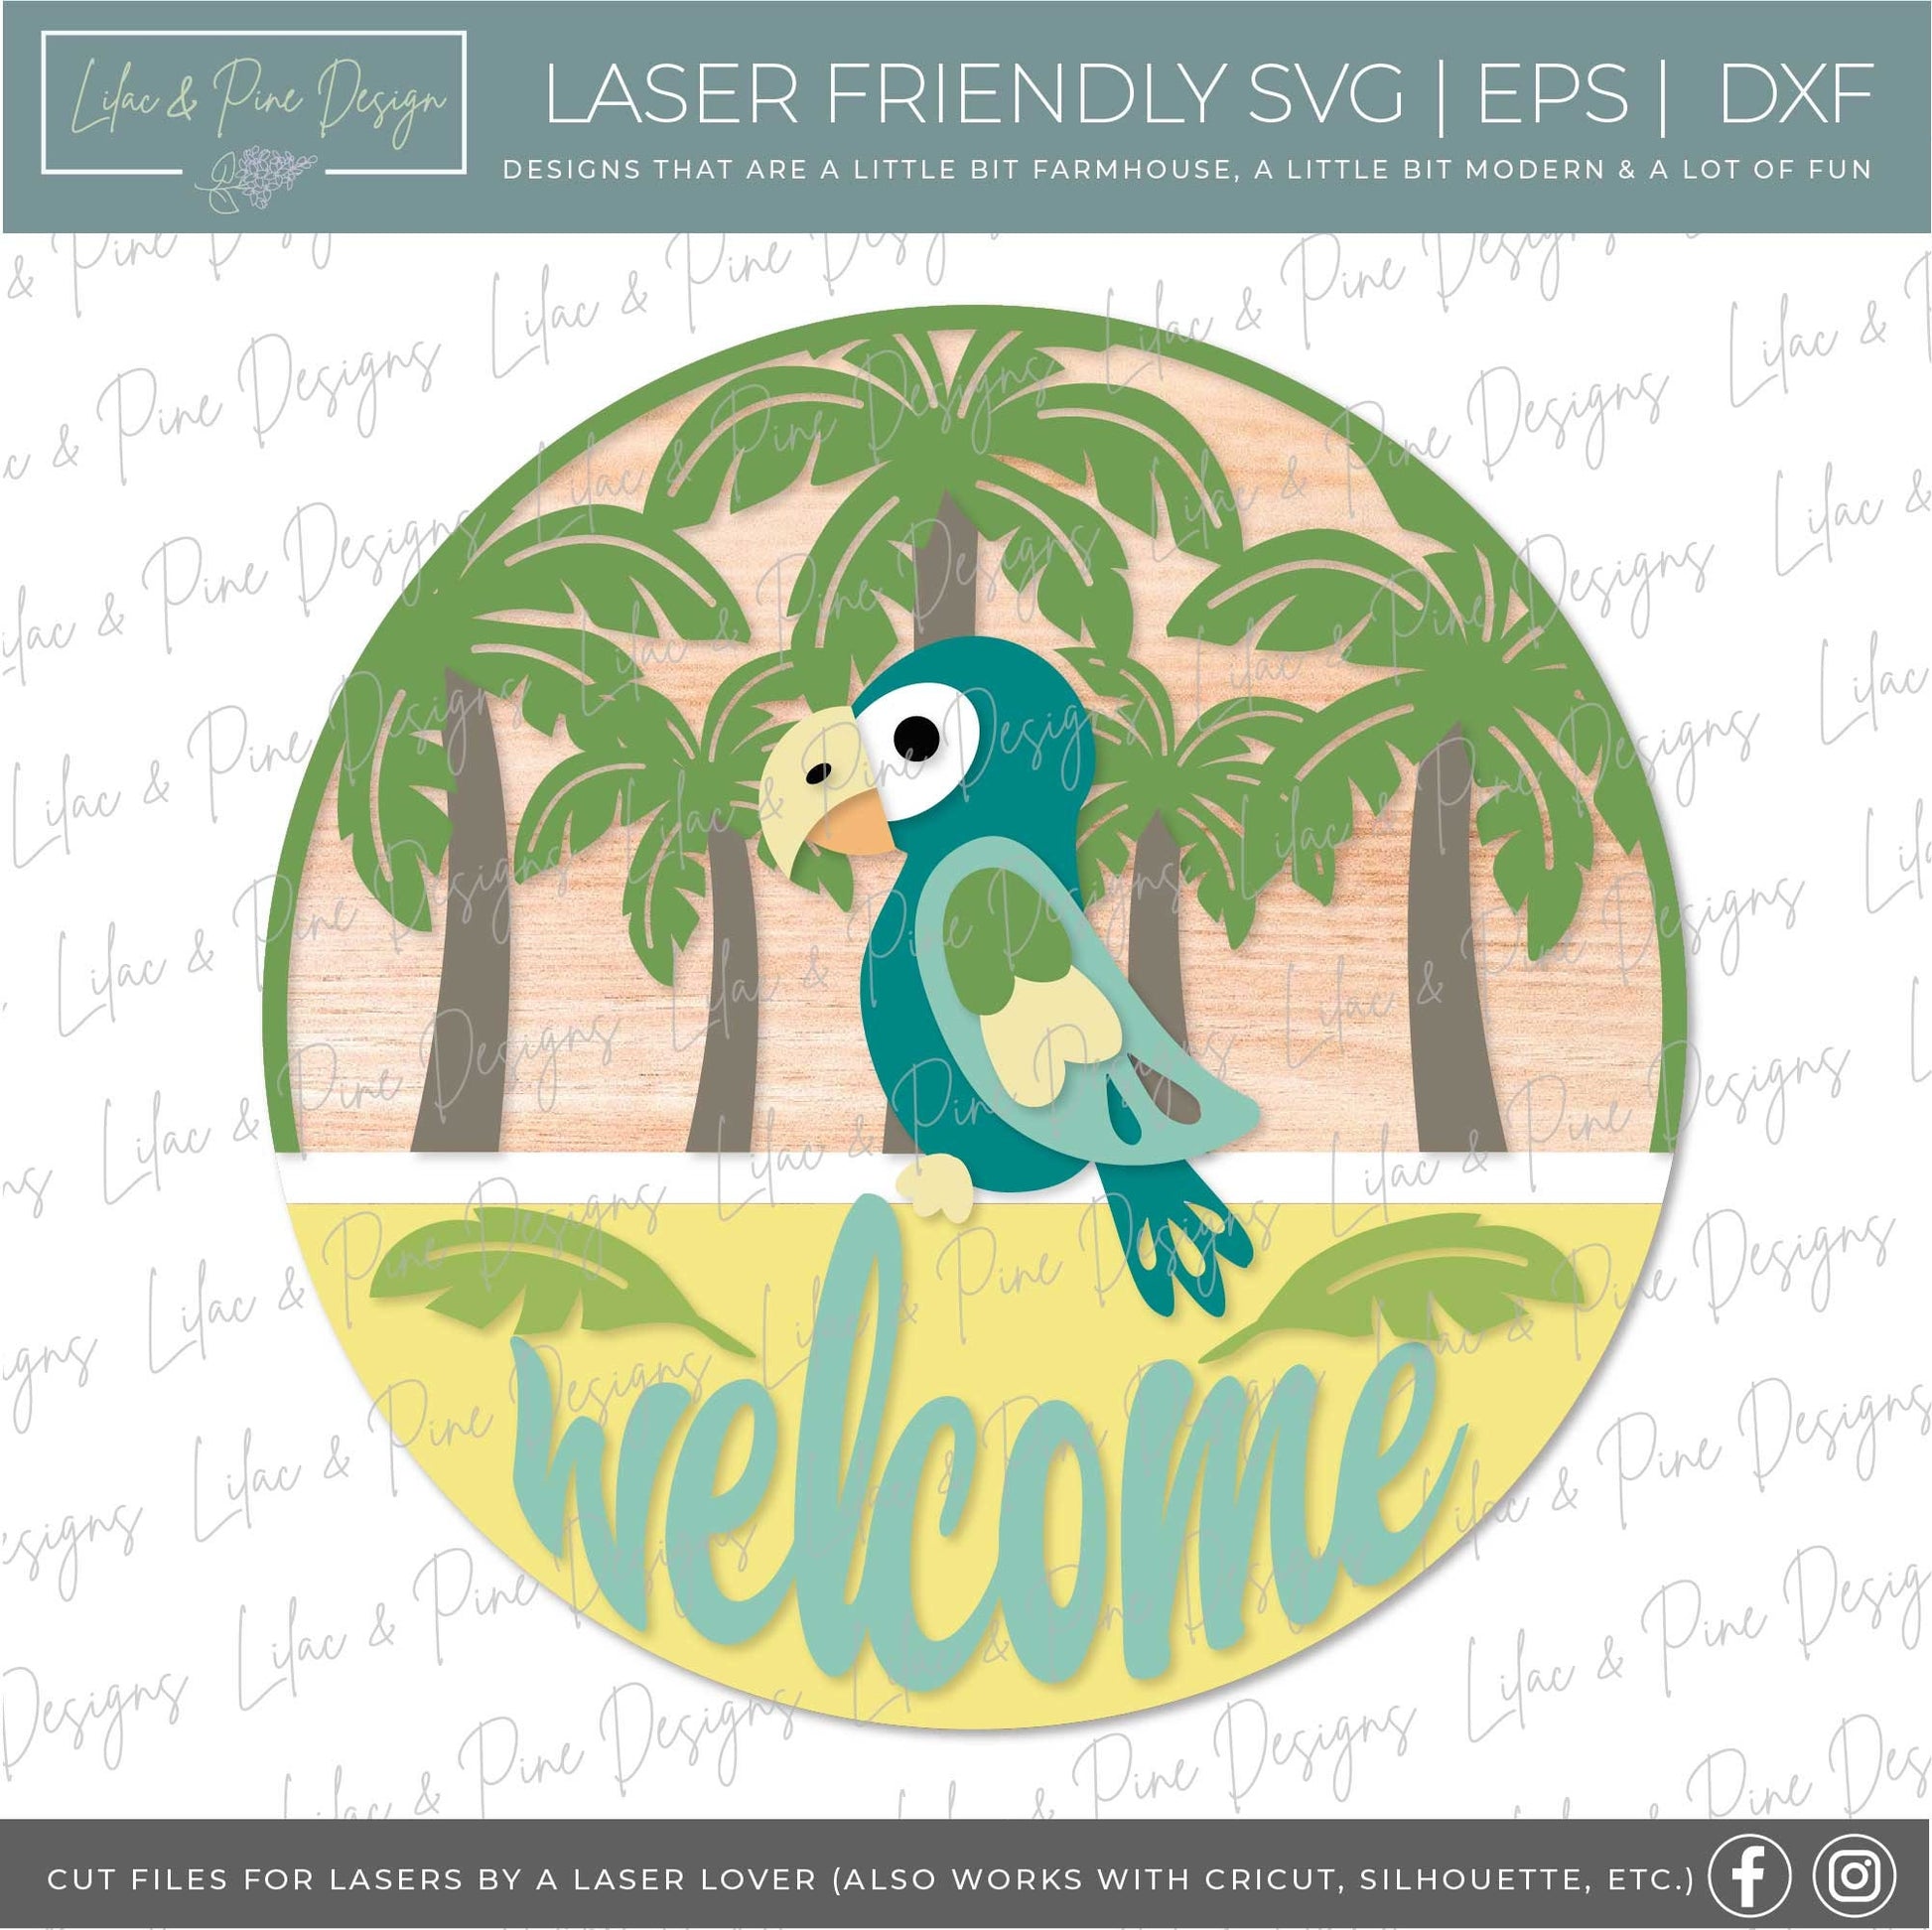 Summer welcome sign bundle, round door hanger sign, toucan SVG, tropical svg, sun quilt SVG, grill sign. Glowforge SVG, laser cut file